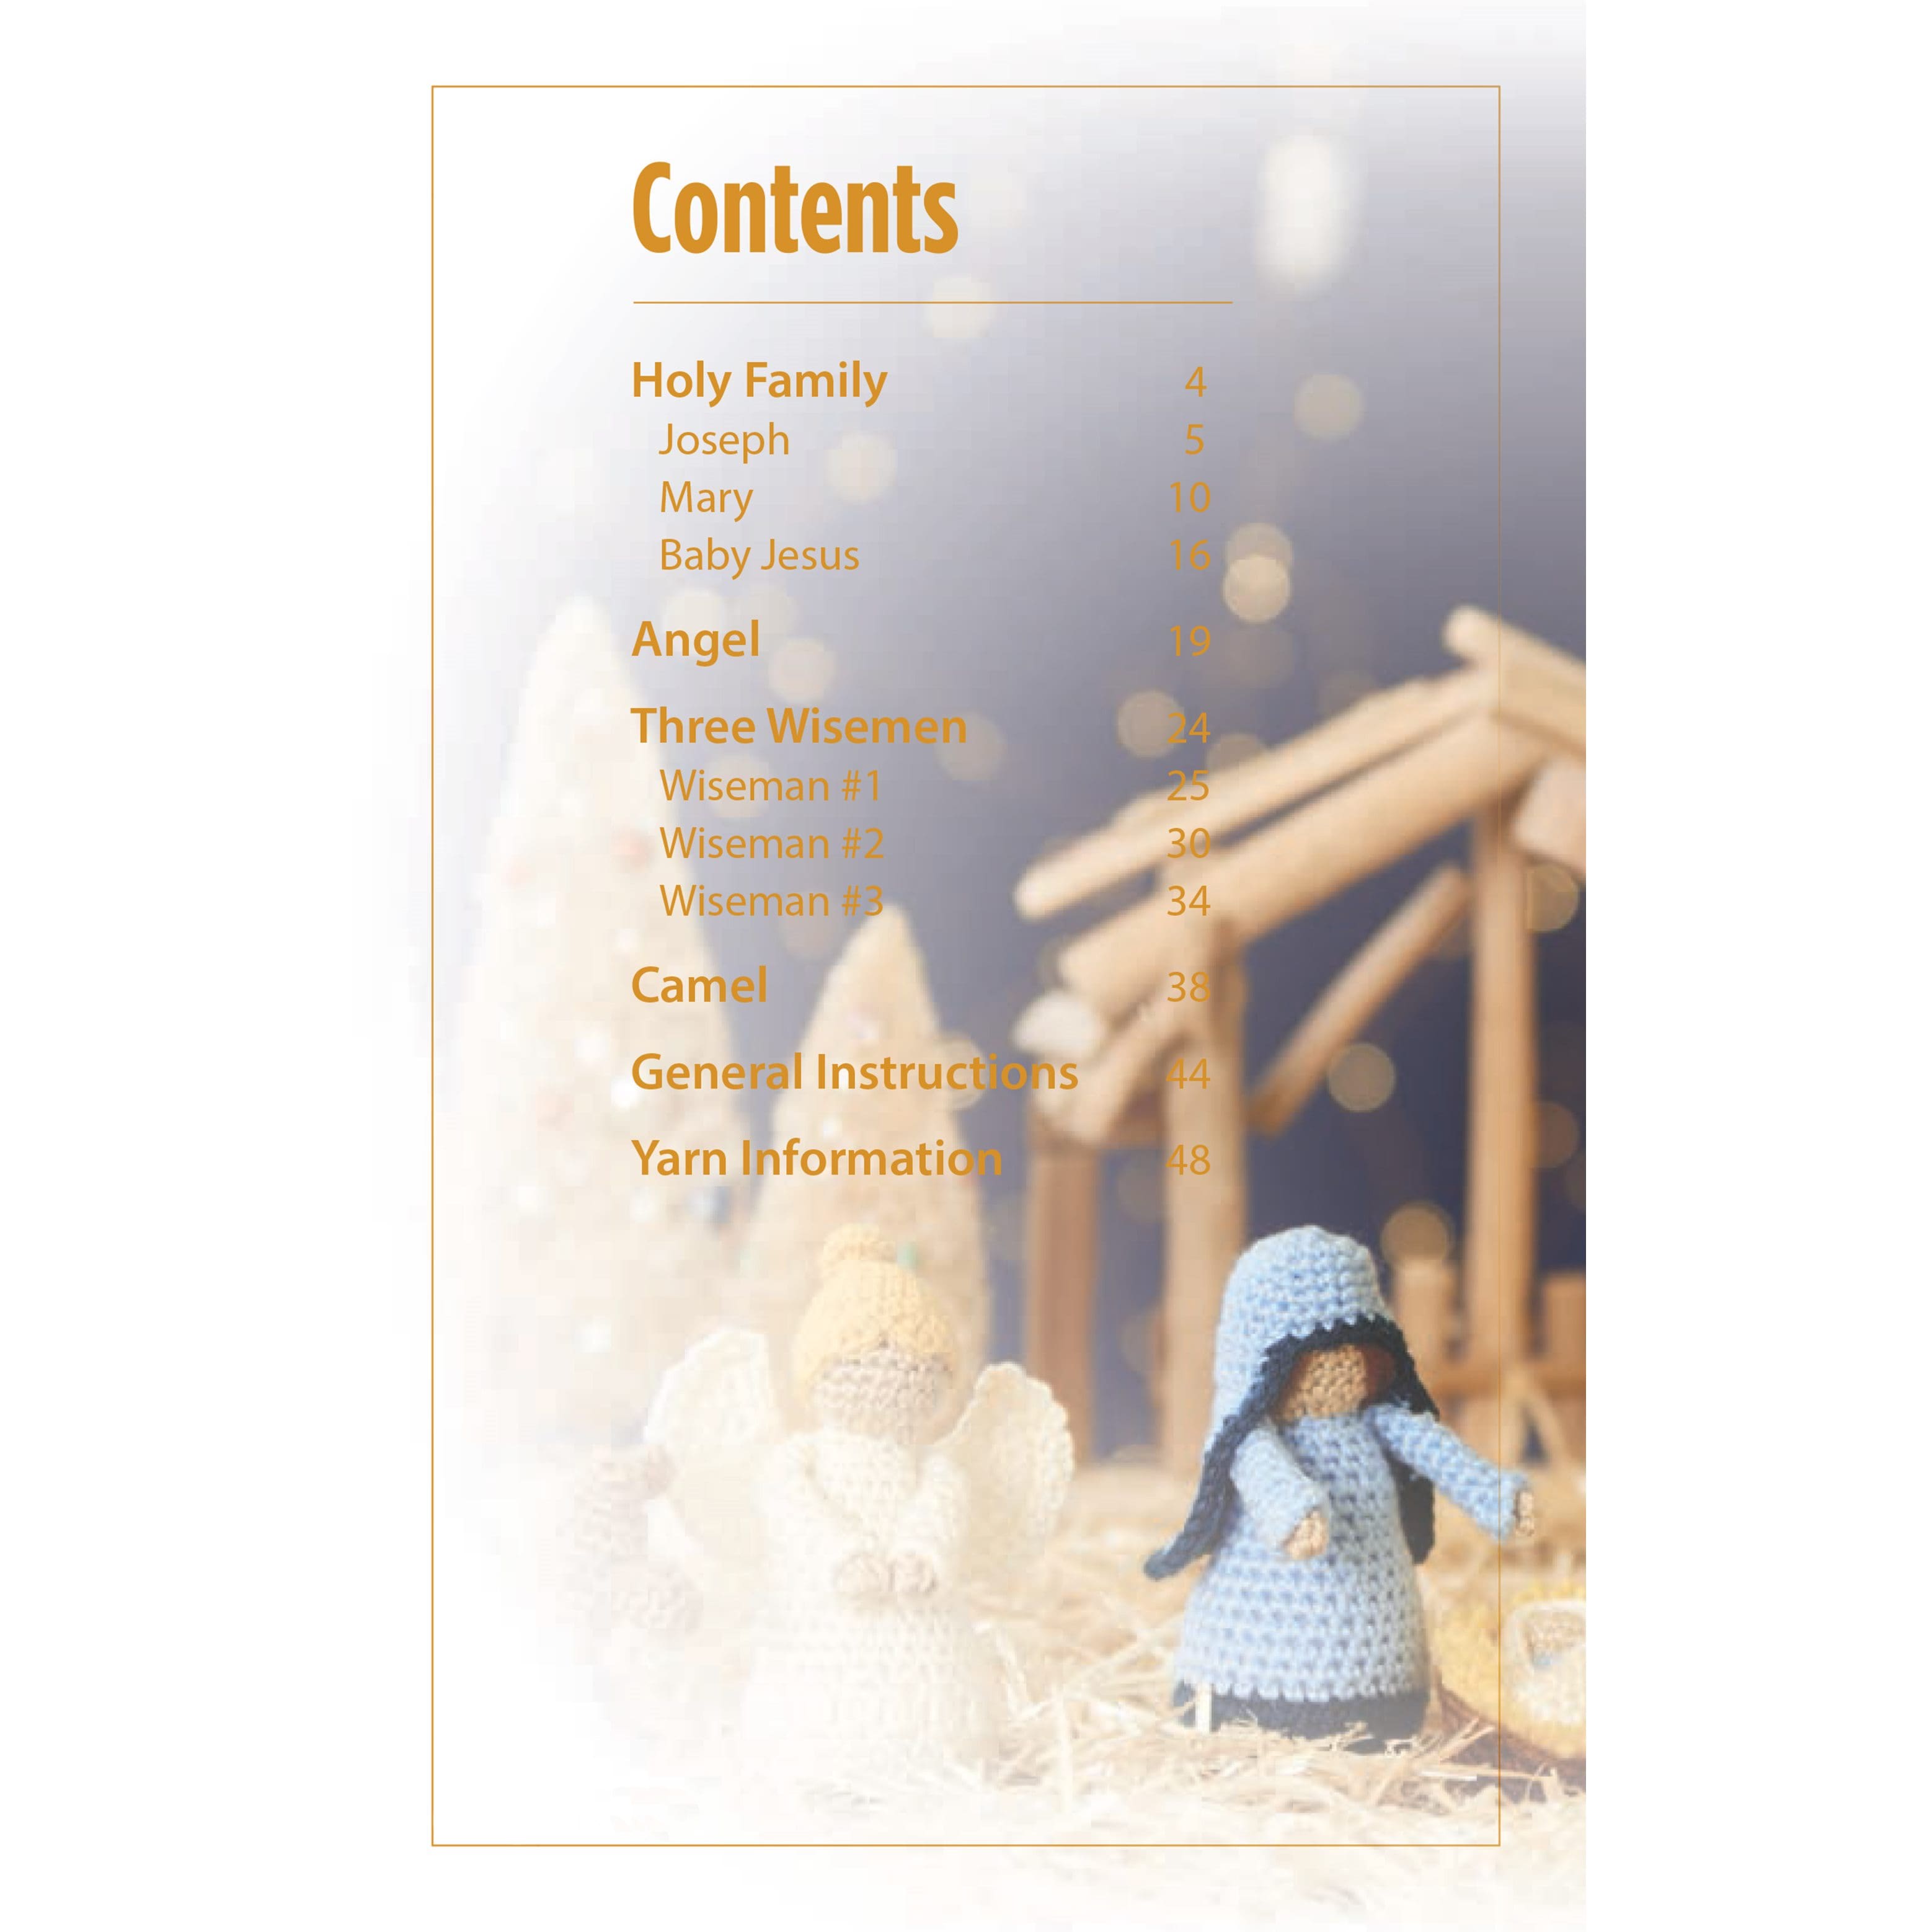 Leisure Arts&#xAE; Crochet Nativity Book